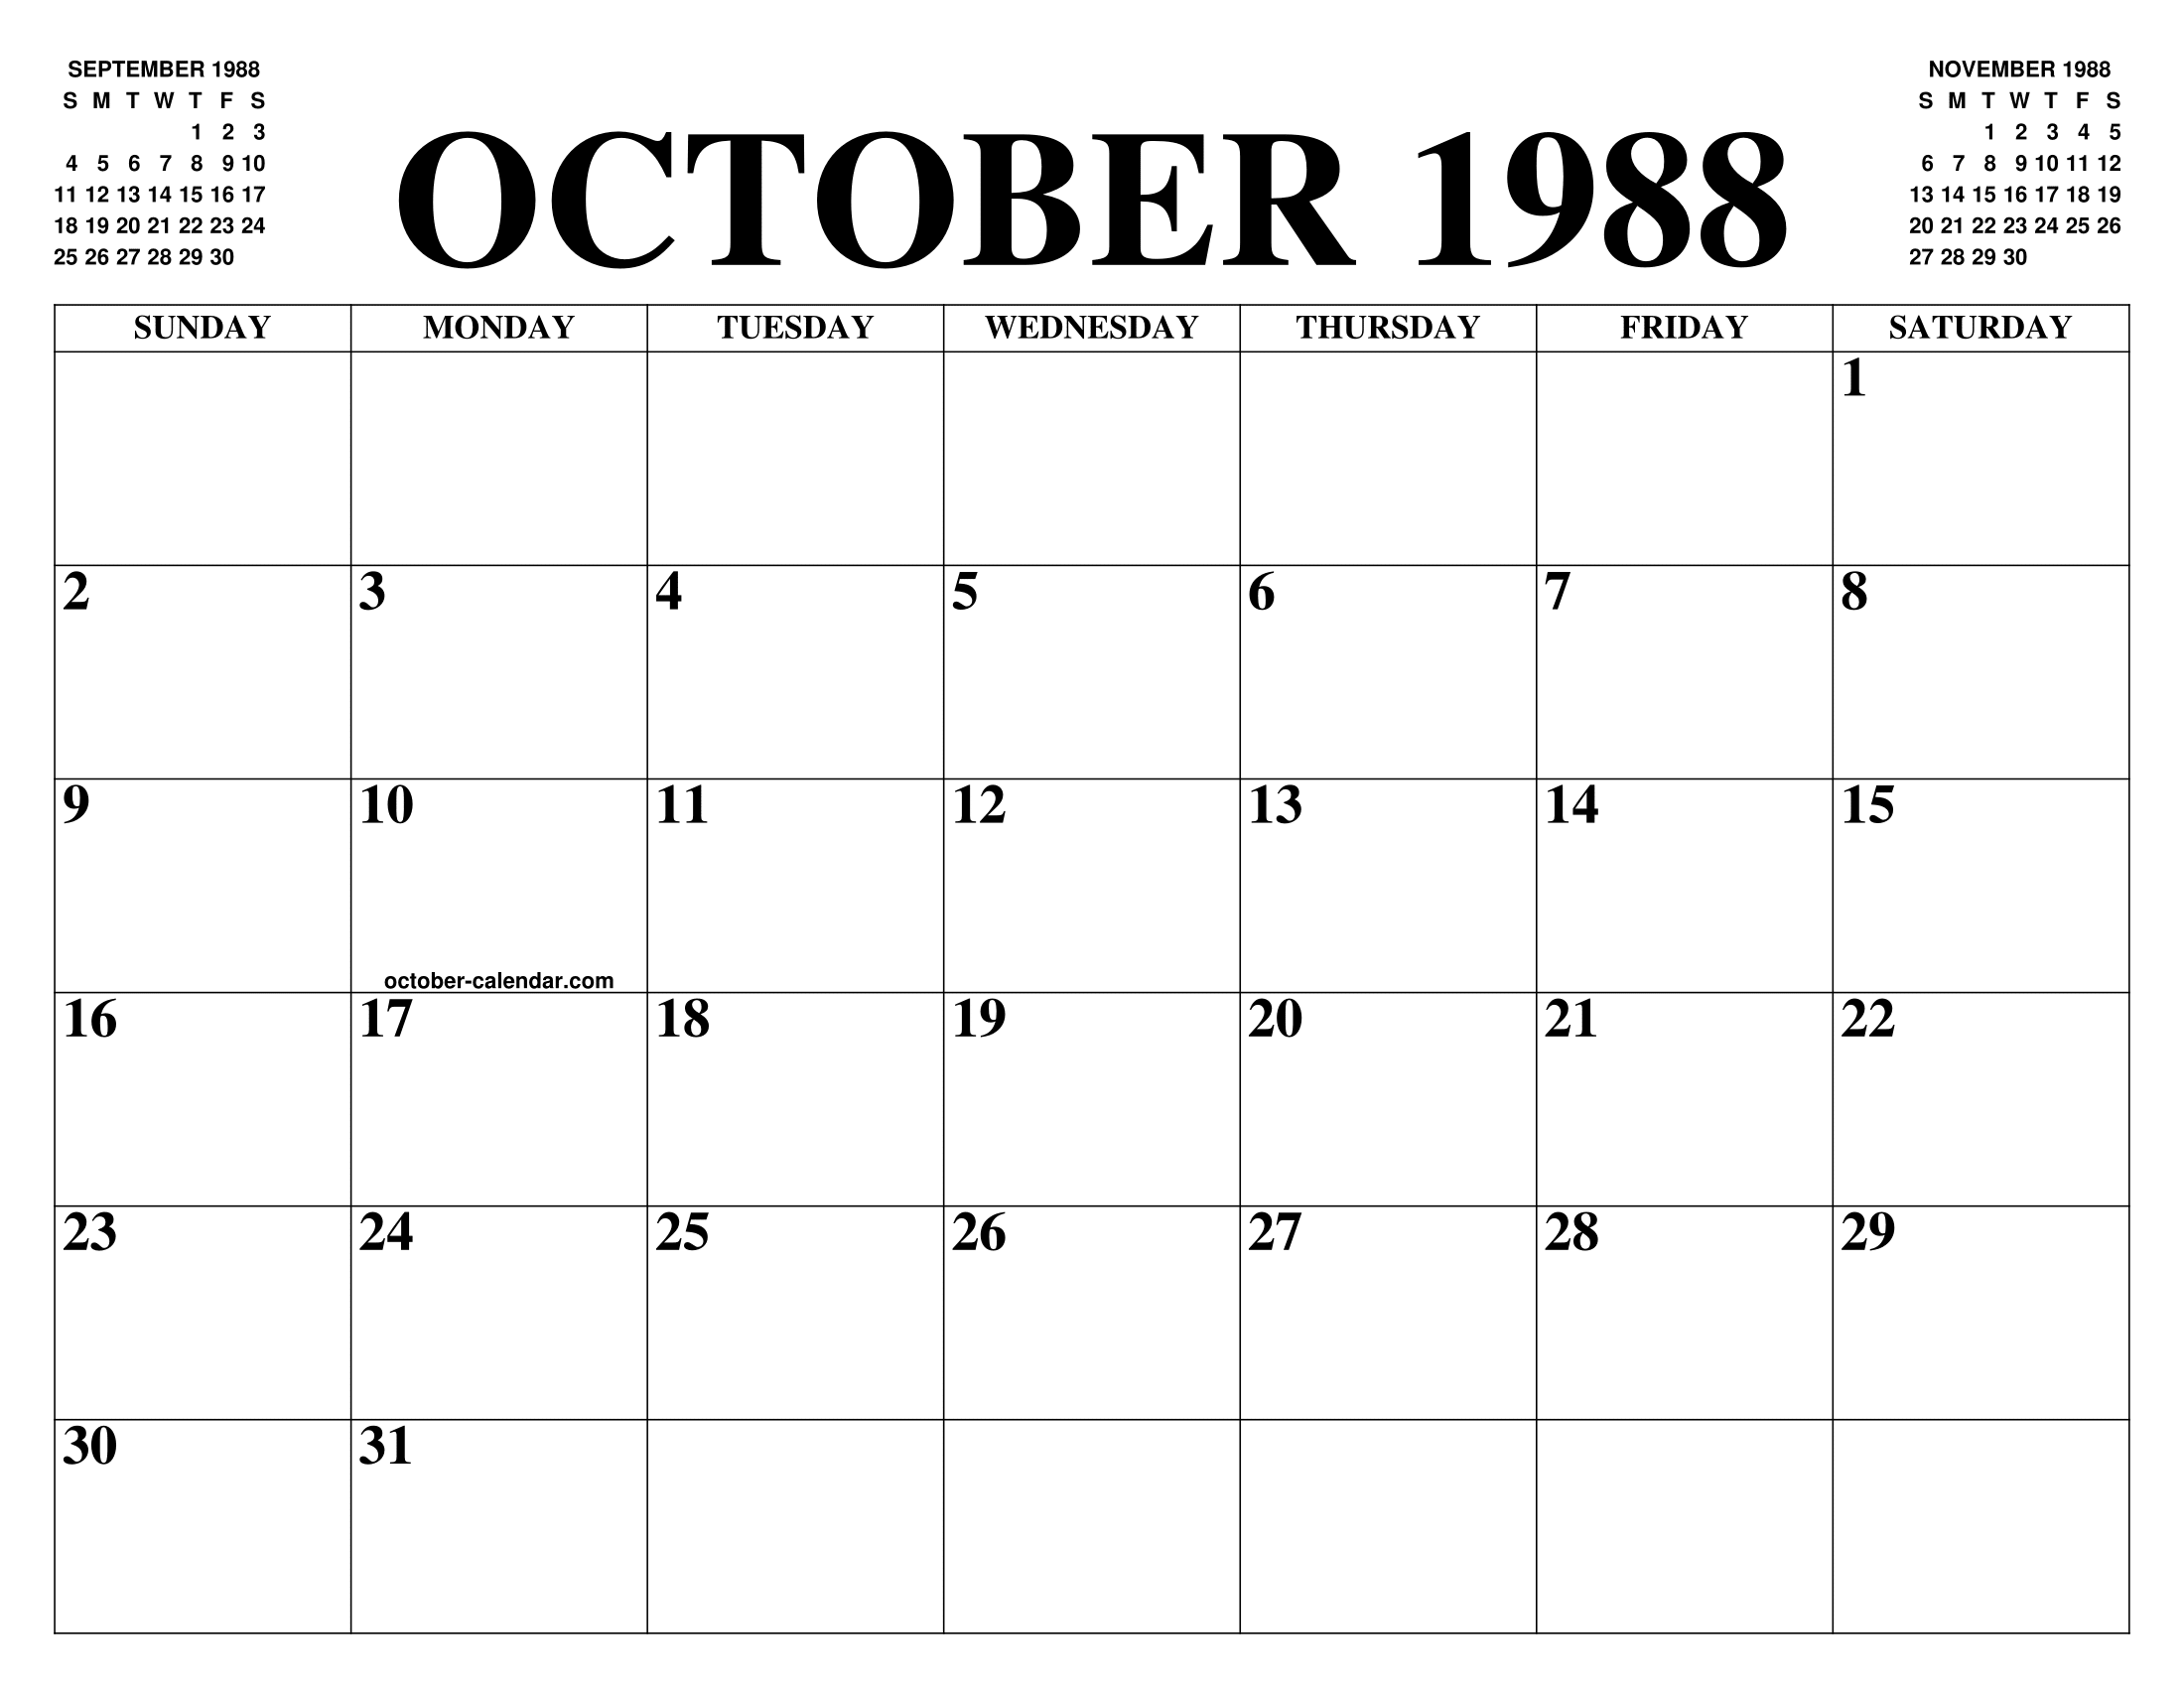 OCTOBER 1988 CALENDAR OF THE MONTH: FREE PRINTABLE OCTOBER CALENDAR OF